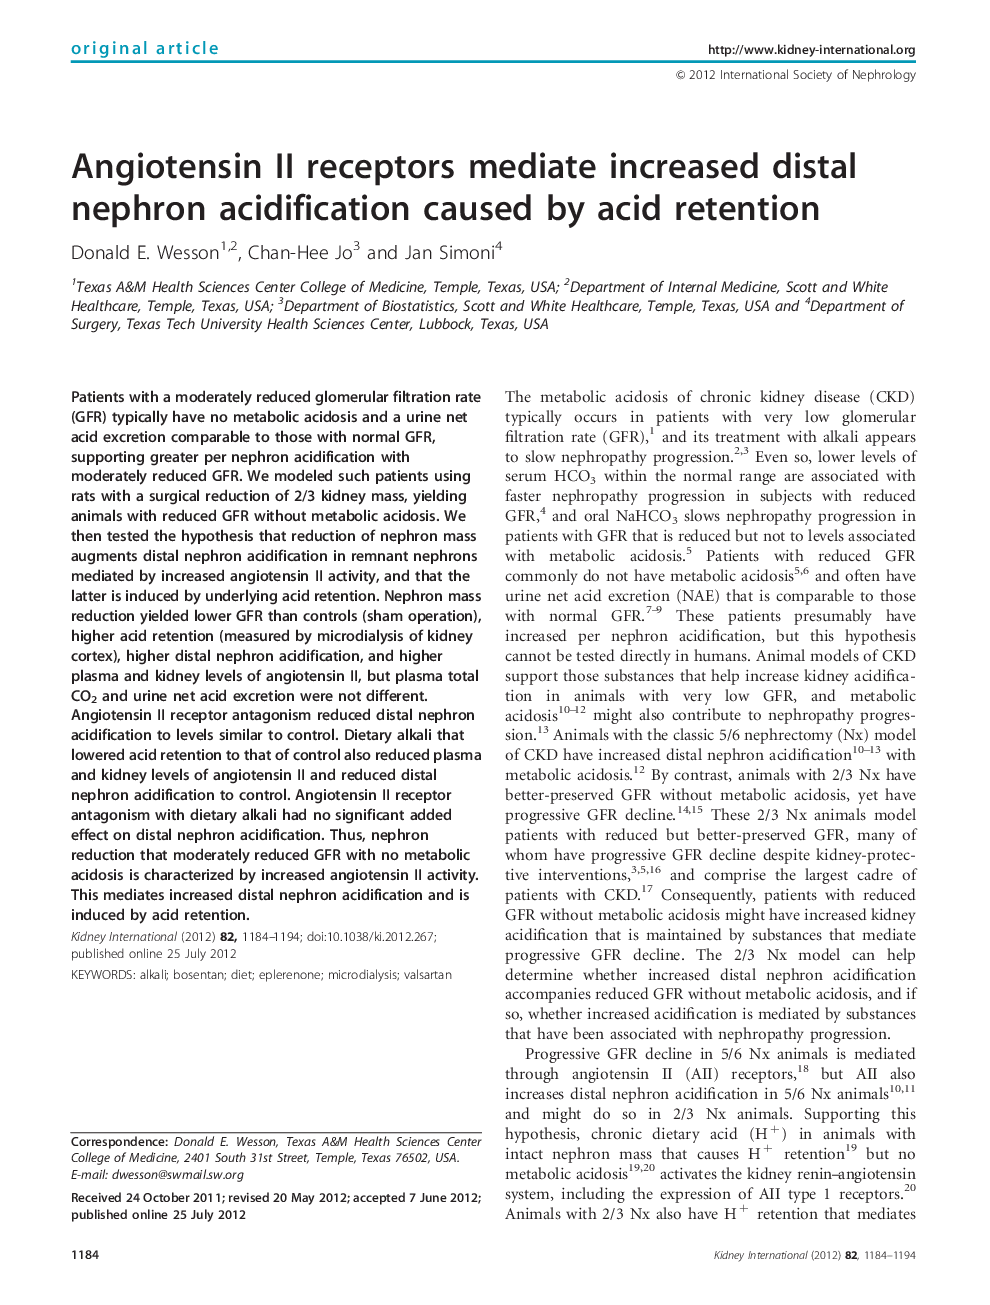 Angiotensin II receptors mediate increased distal nephron acidification caused by acid retention